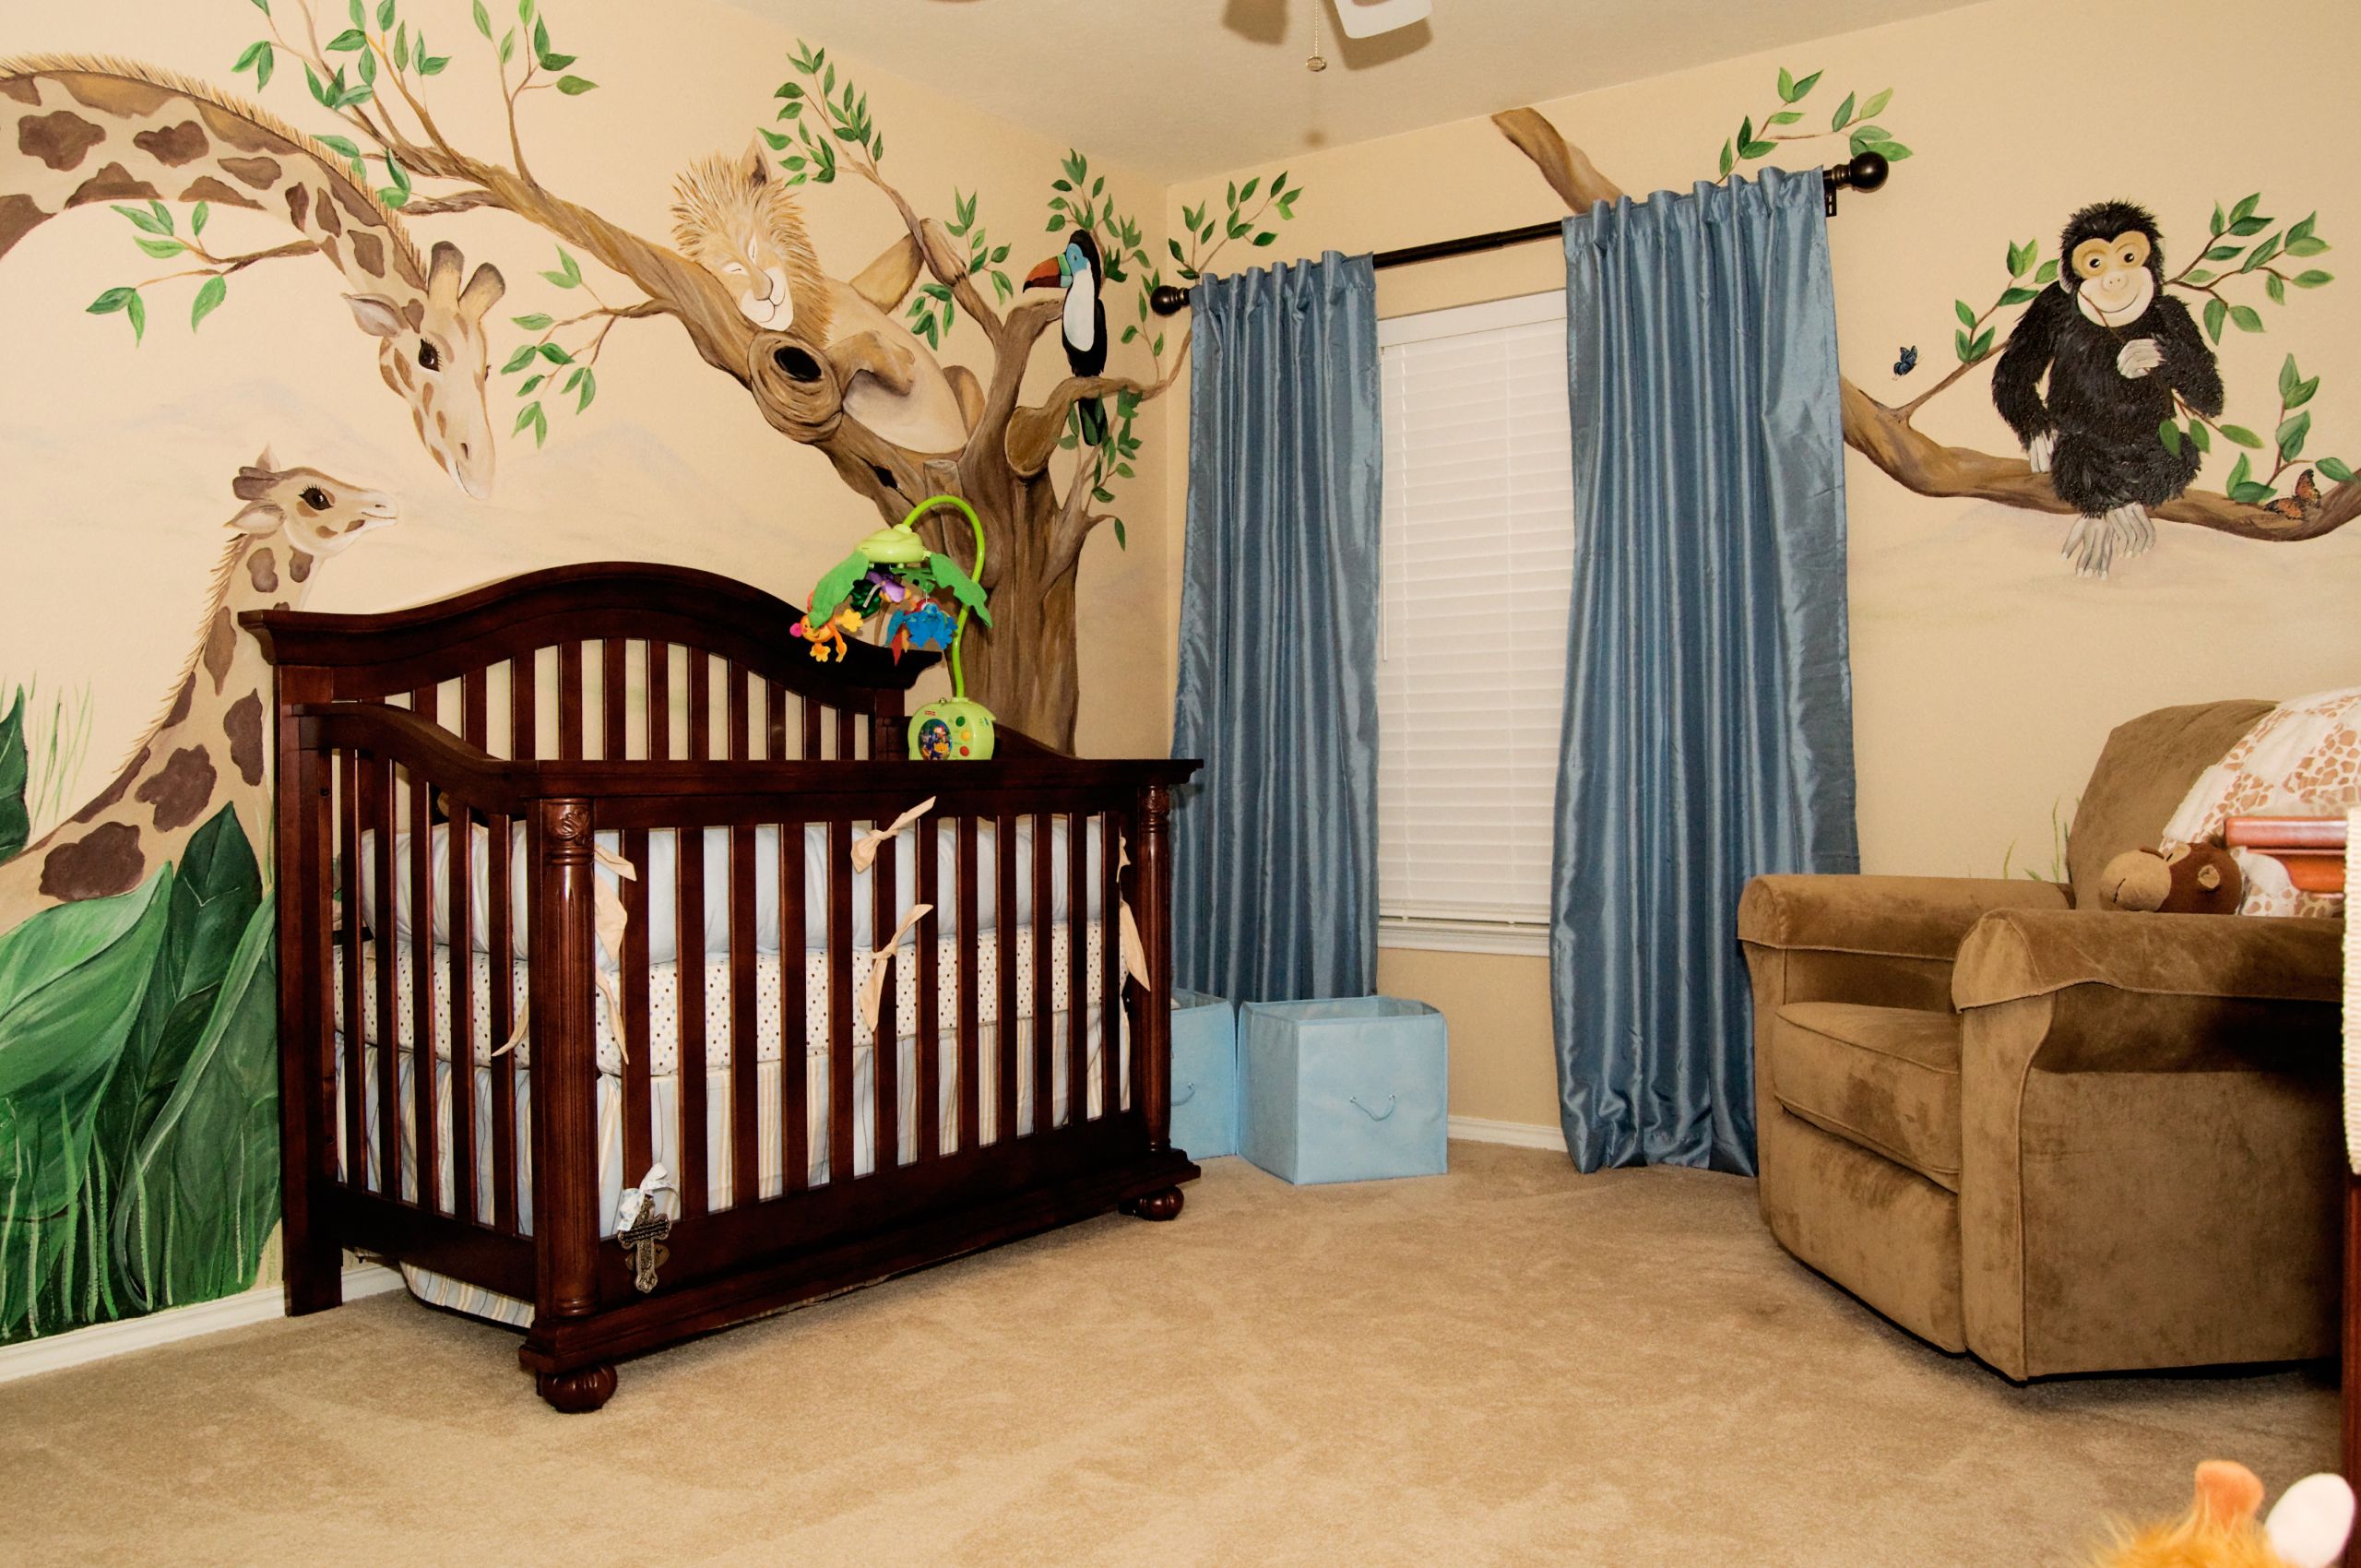 Baby Boy Rooms Decorating Ideas
 Adorable Baby Room Décor Ideas